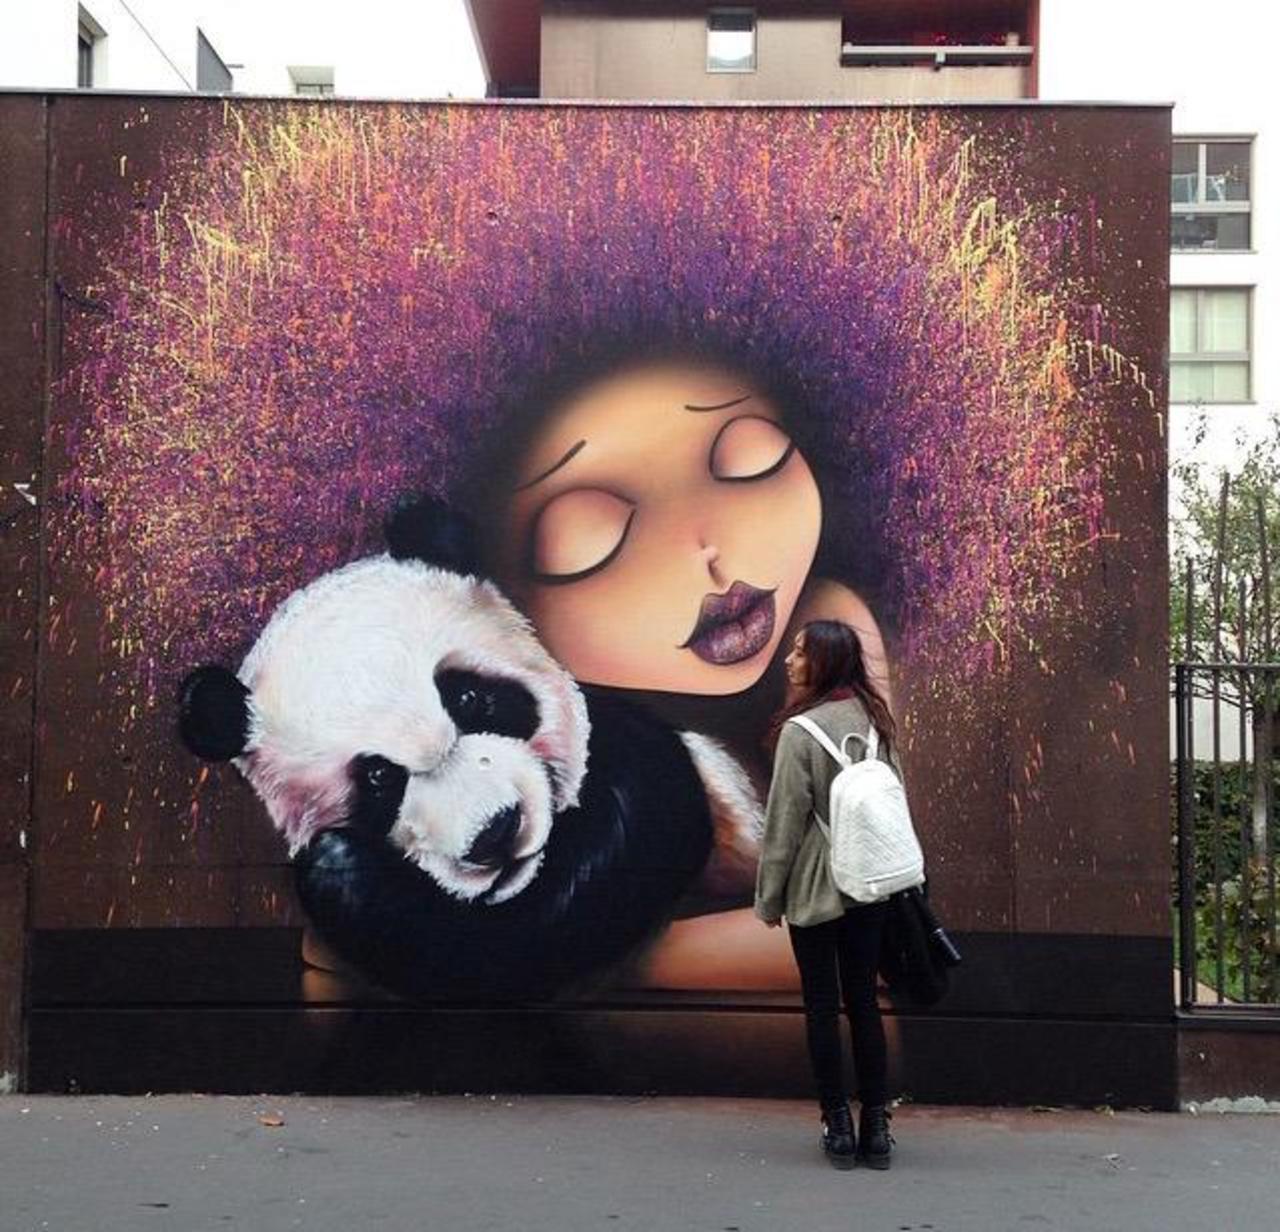 Street Art by VinieGraffiti in Paris 

#art #graffiti #mural #streetart http://t.co/YrOSW2cDBO